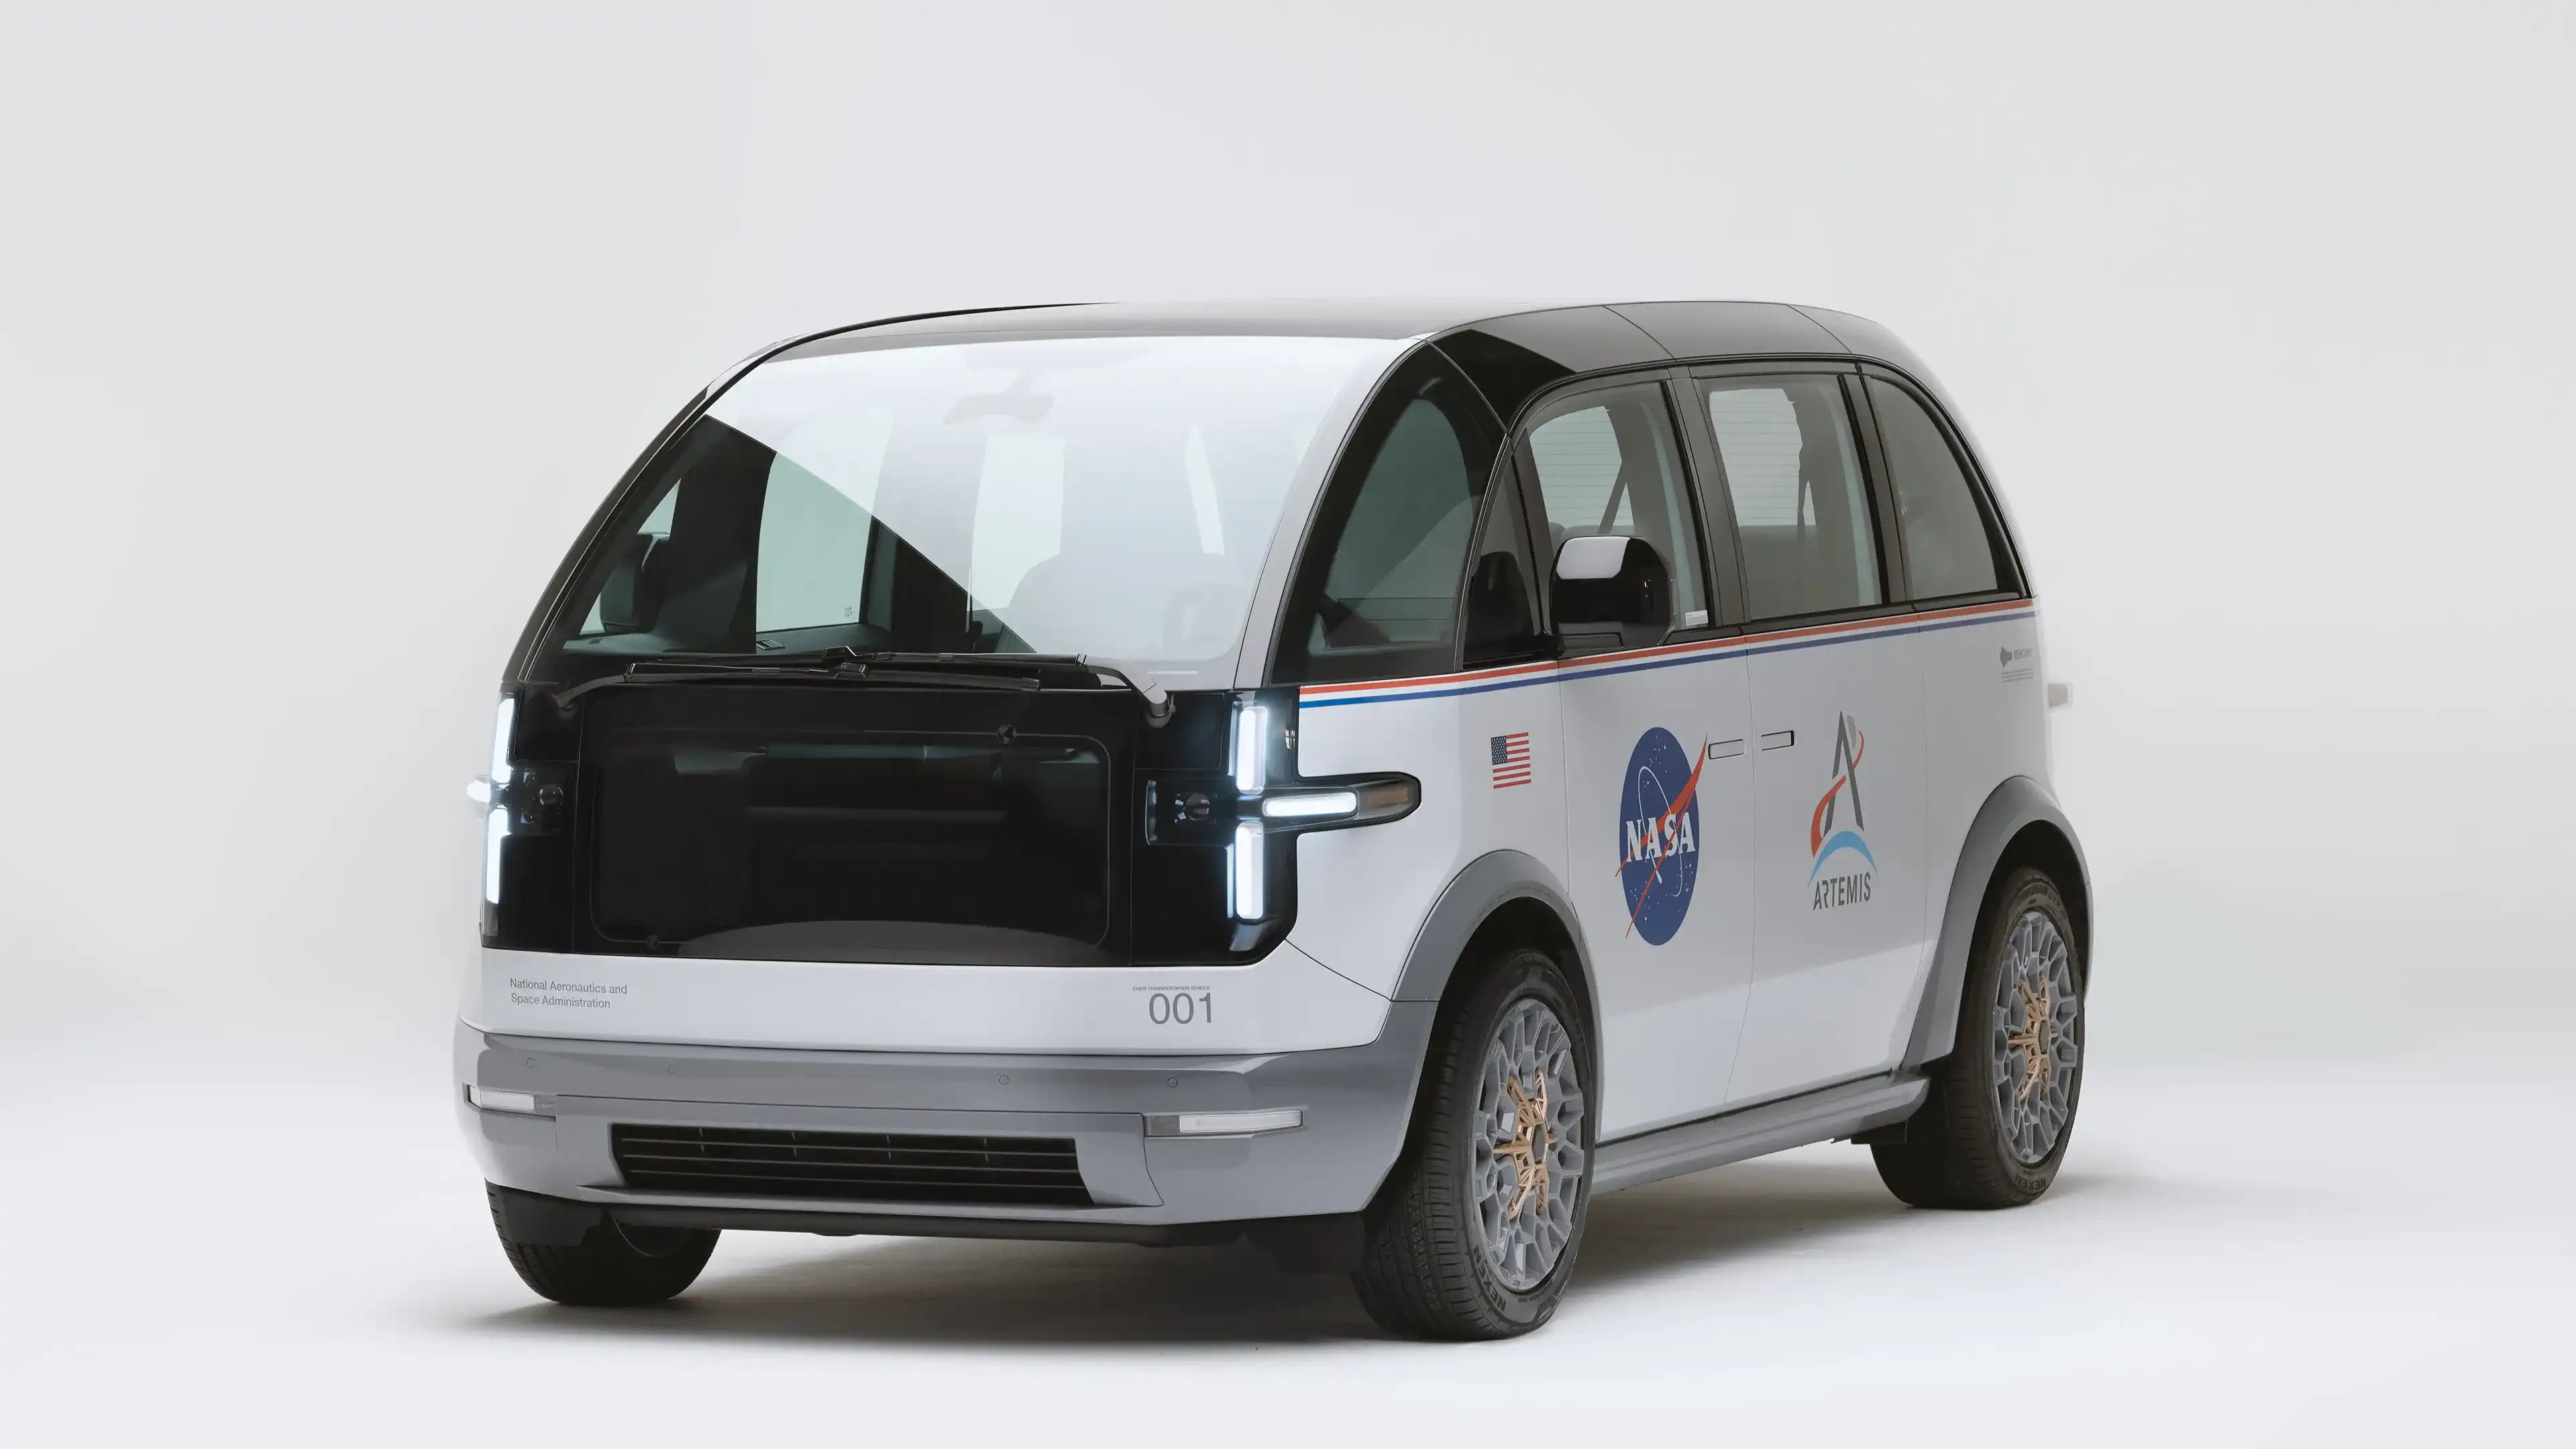 Canoo Crew Transportation Vehicle (CTV) for Nasa Artemis Mission